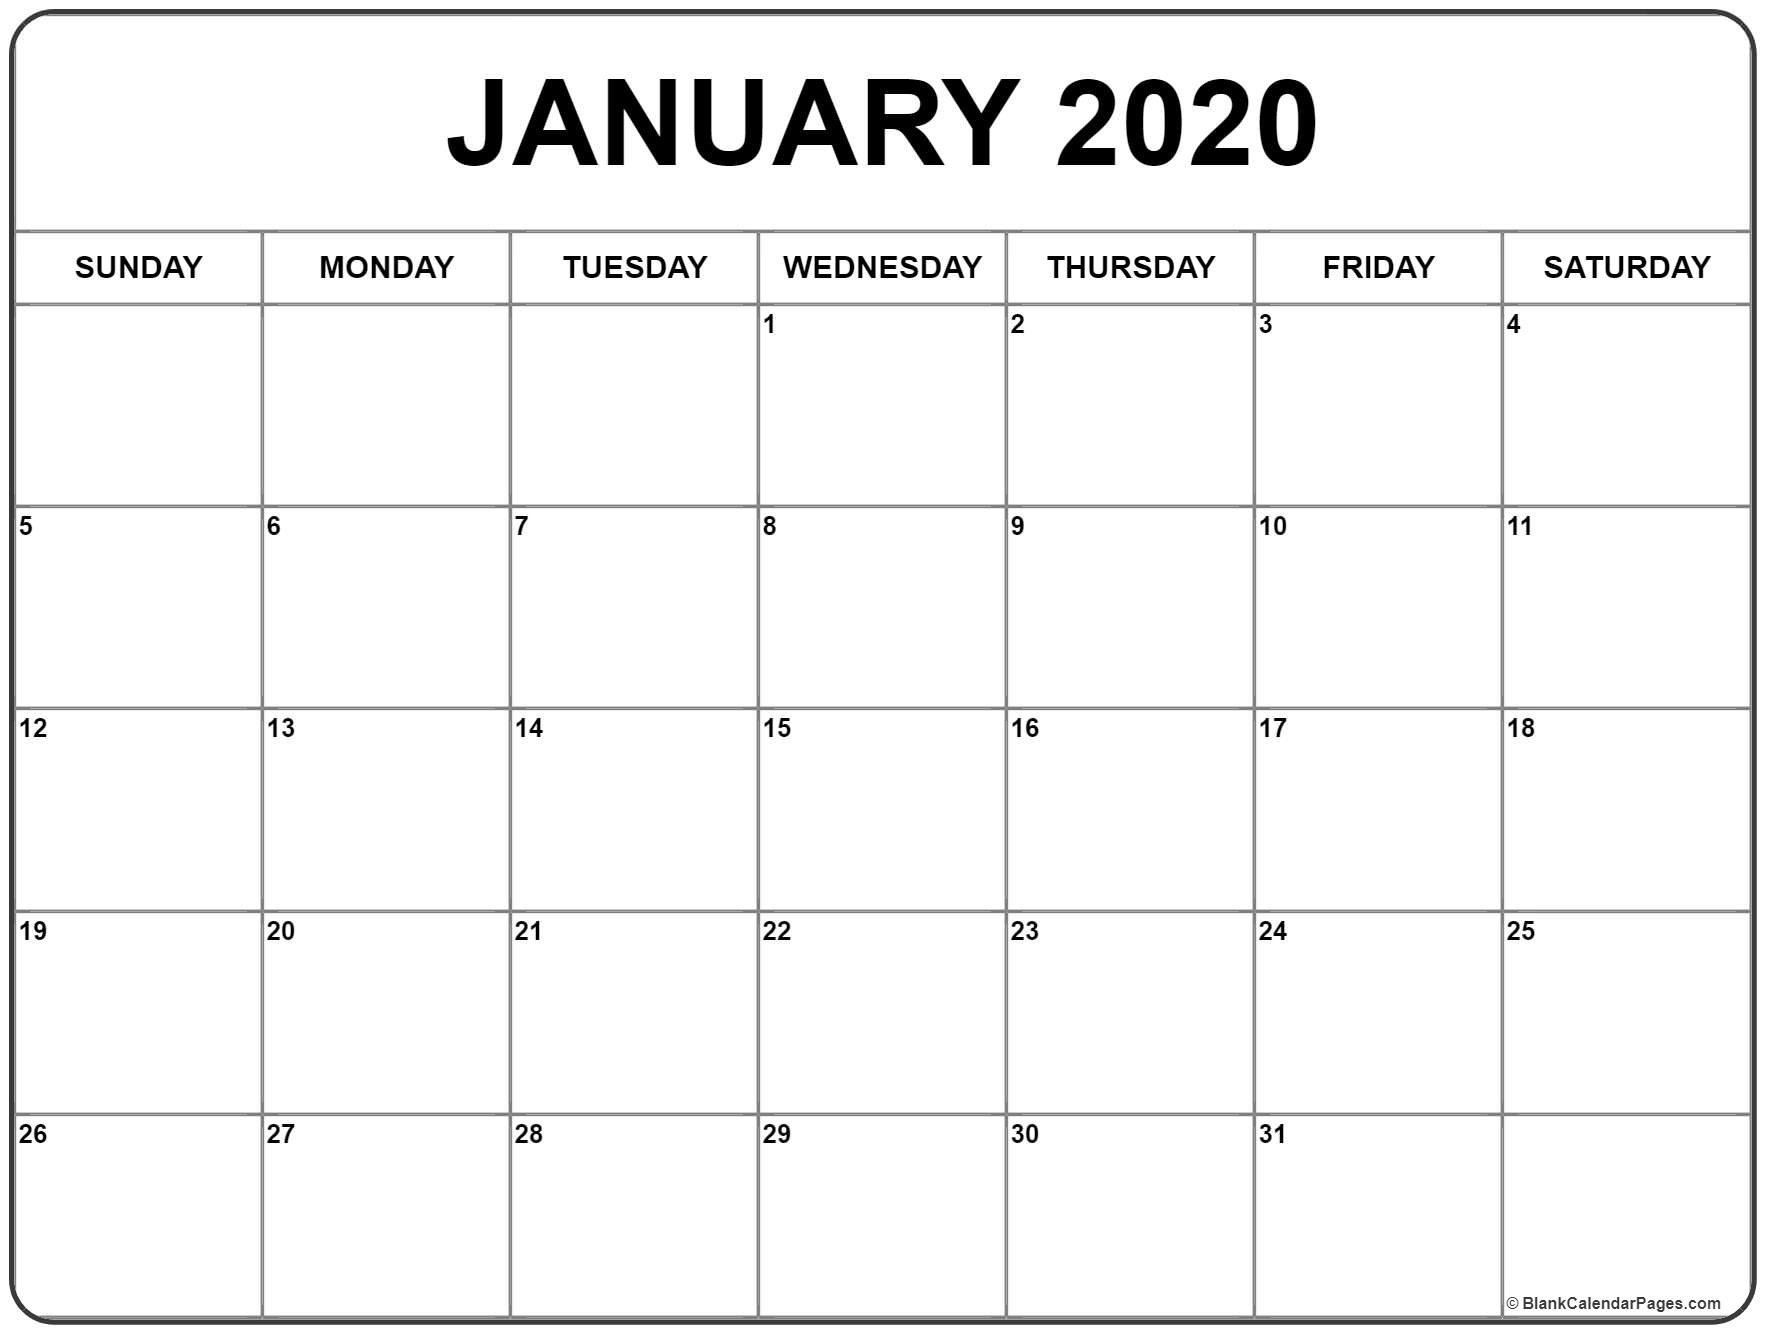 Printable January 2020 Calendar - Free Blank Templates